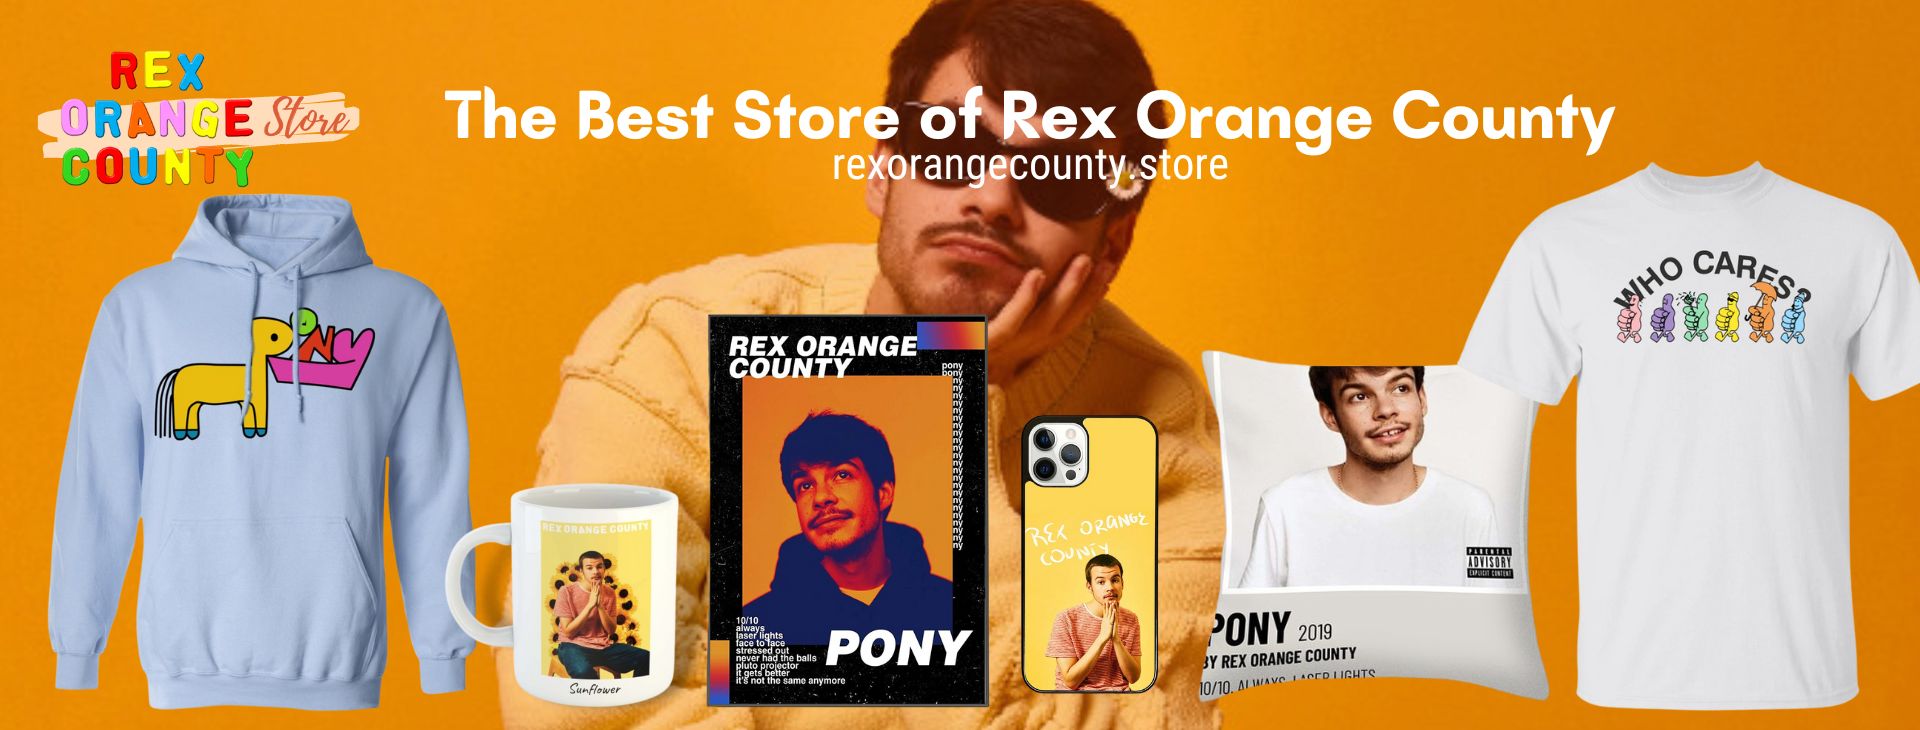 rex orange county as the flower boy cover : r/rexorangecounty